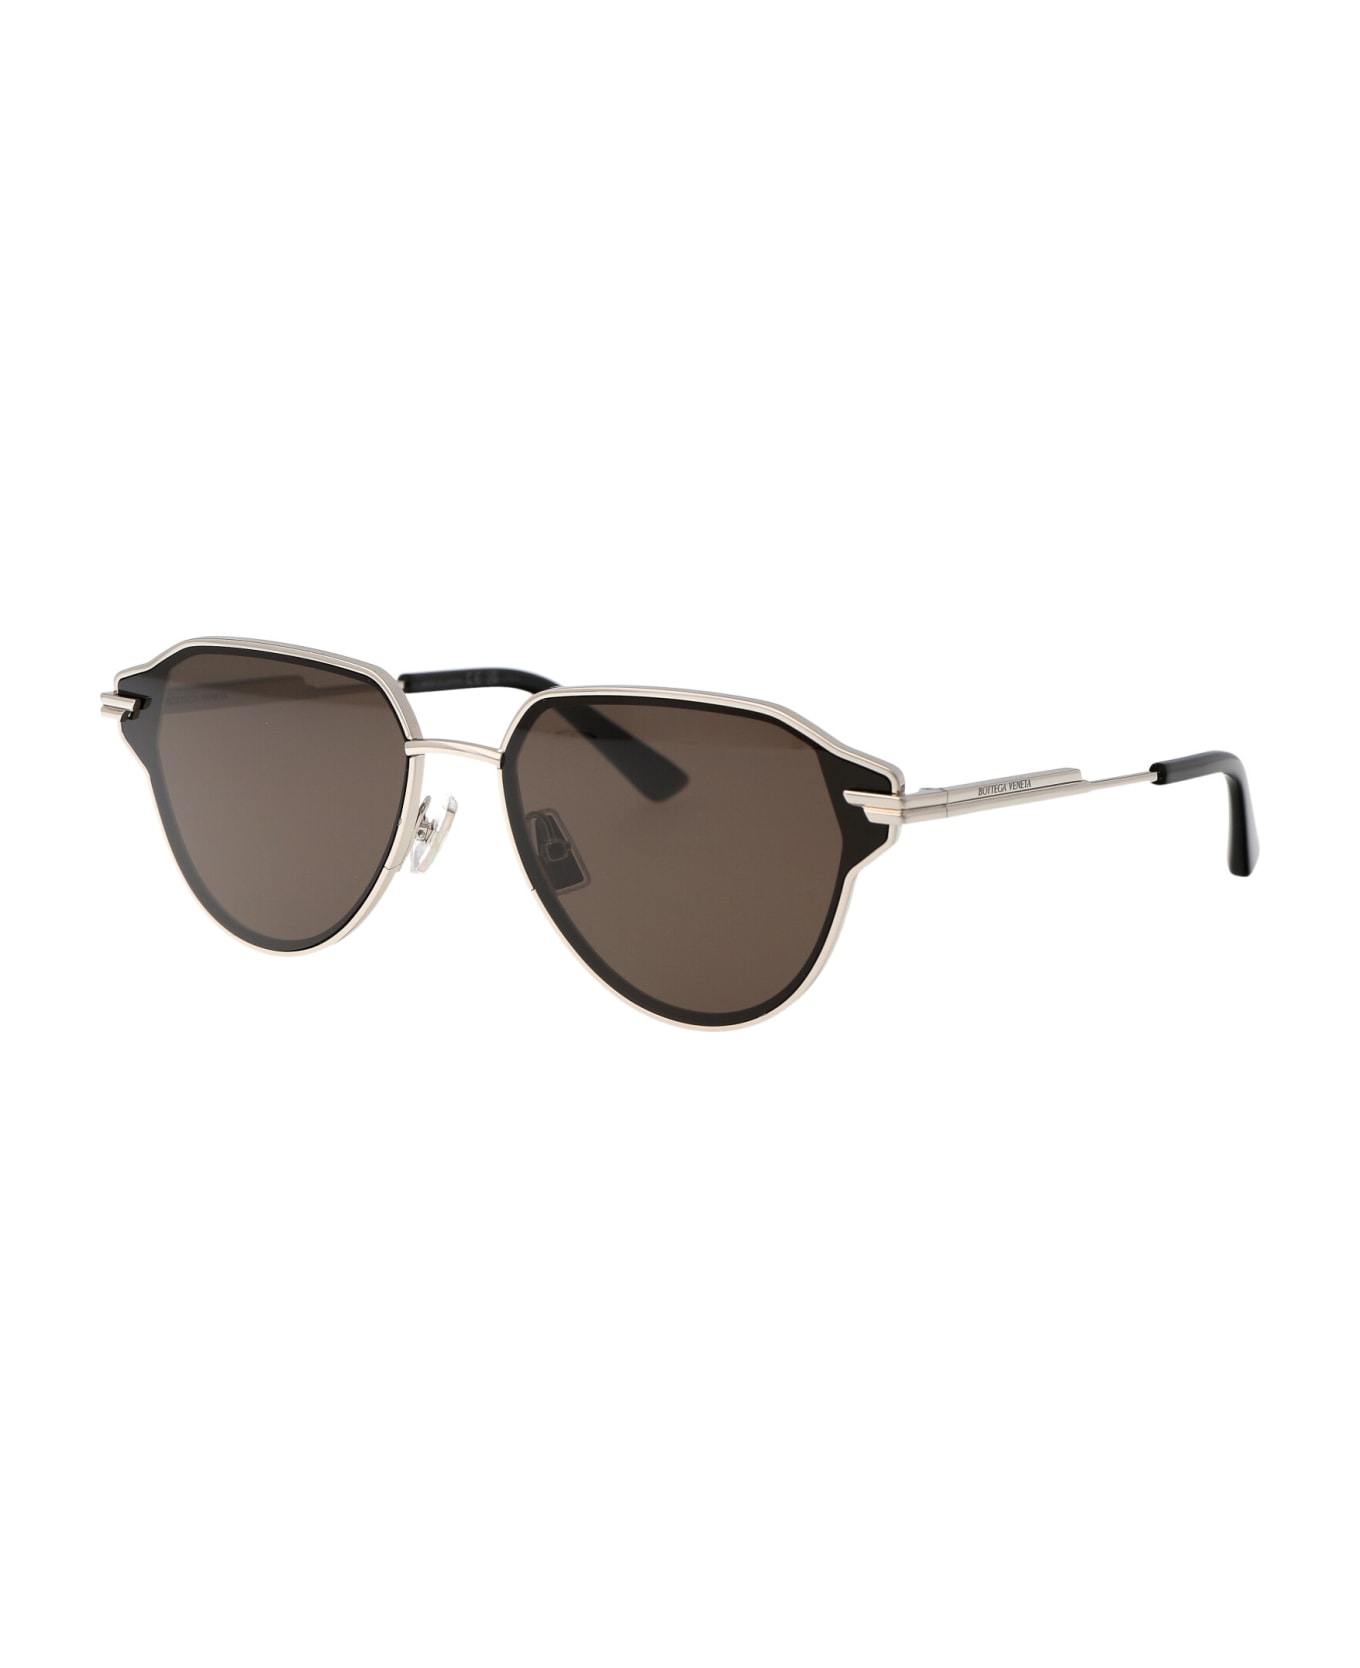 Bottega Veneta Eyewear Bv1271s Sunglasses - 004 SILVER SILVER BROWN